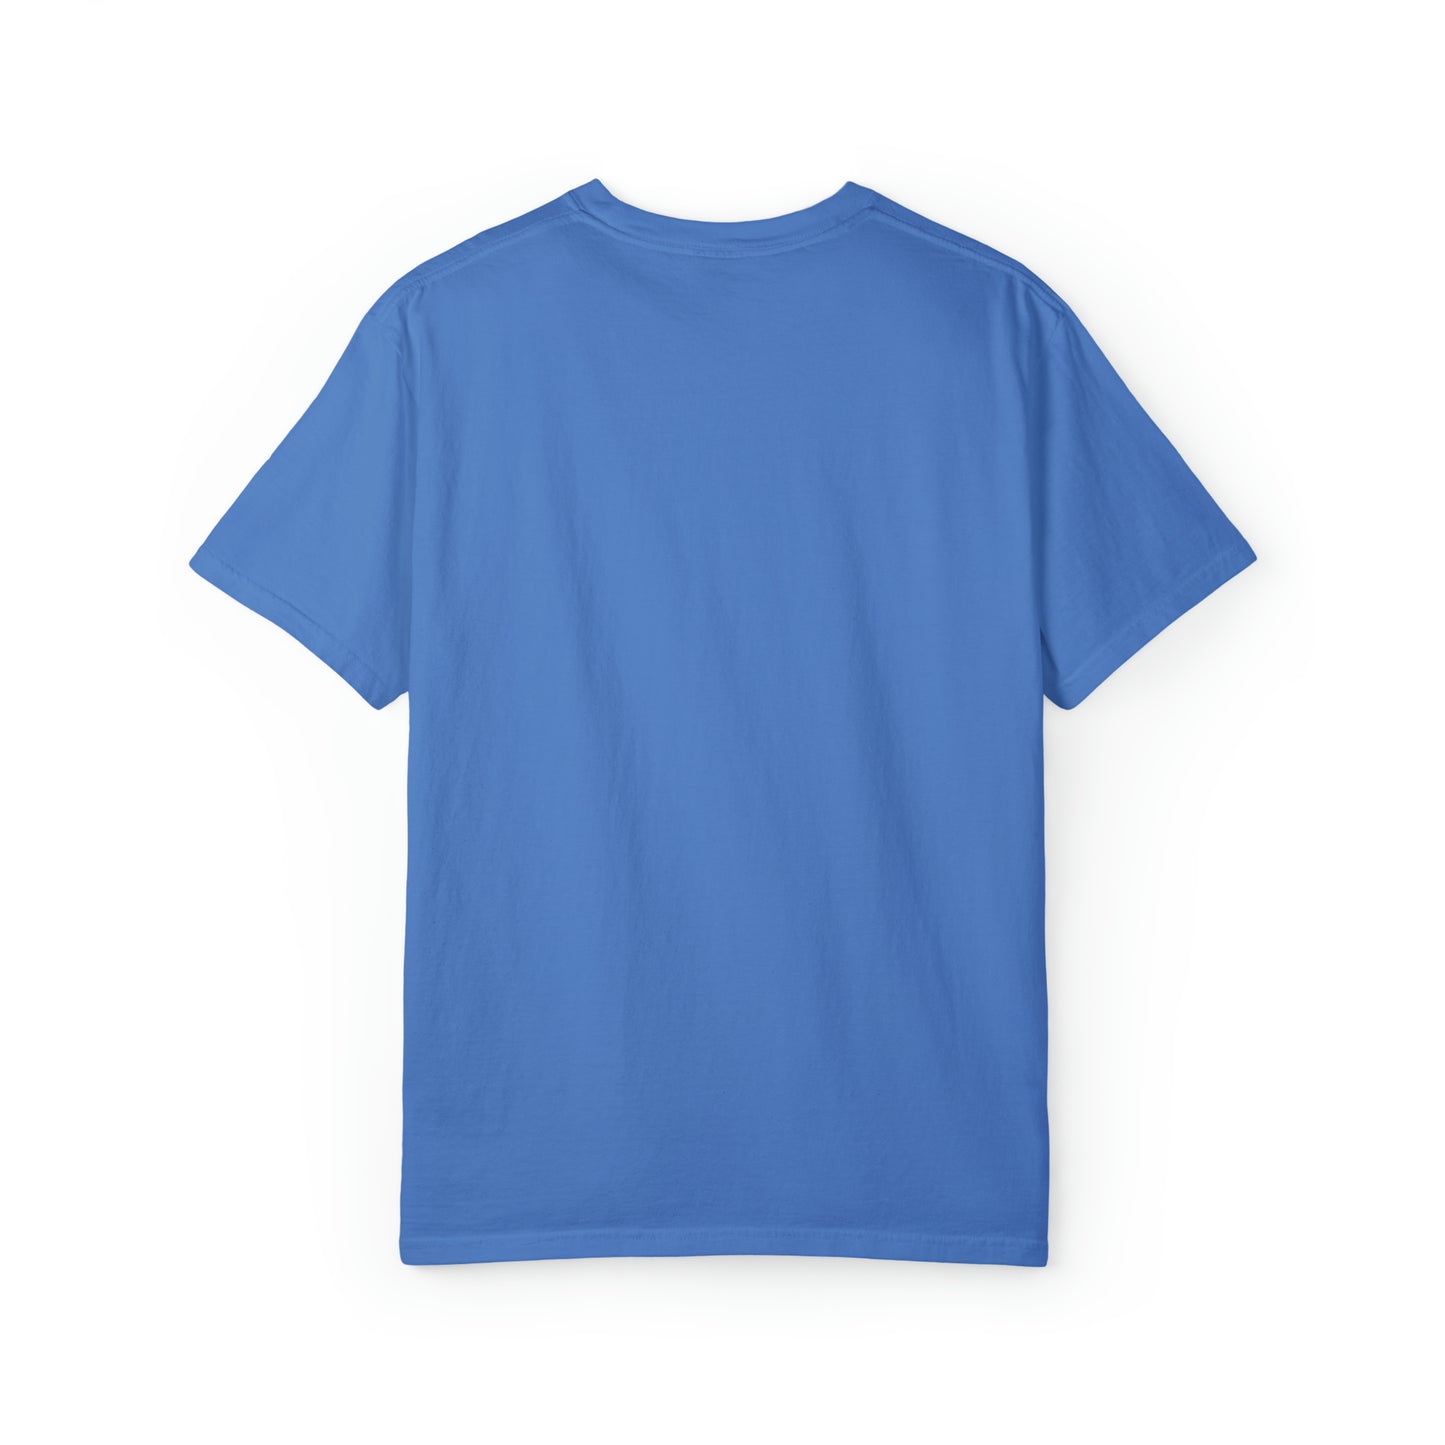 Blind Archer Unisex T-shirt - Variation 3